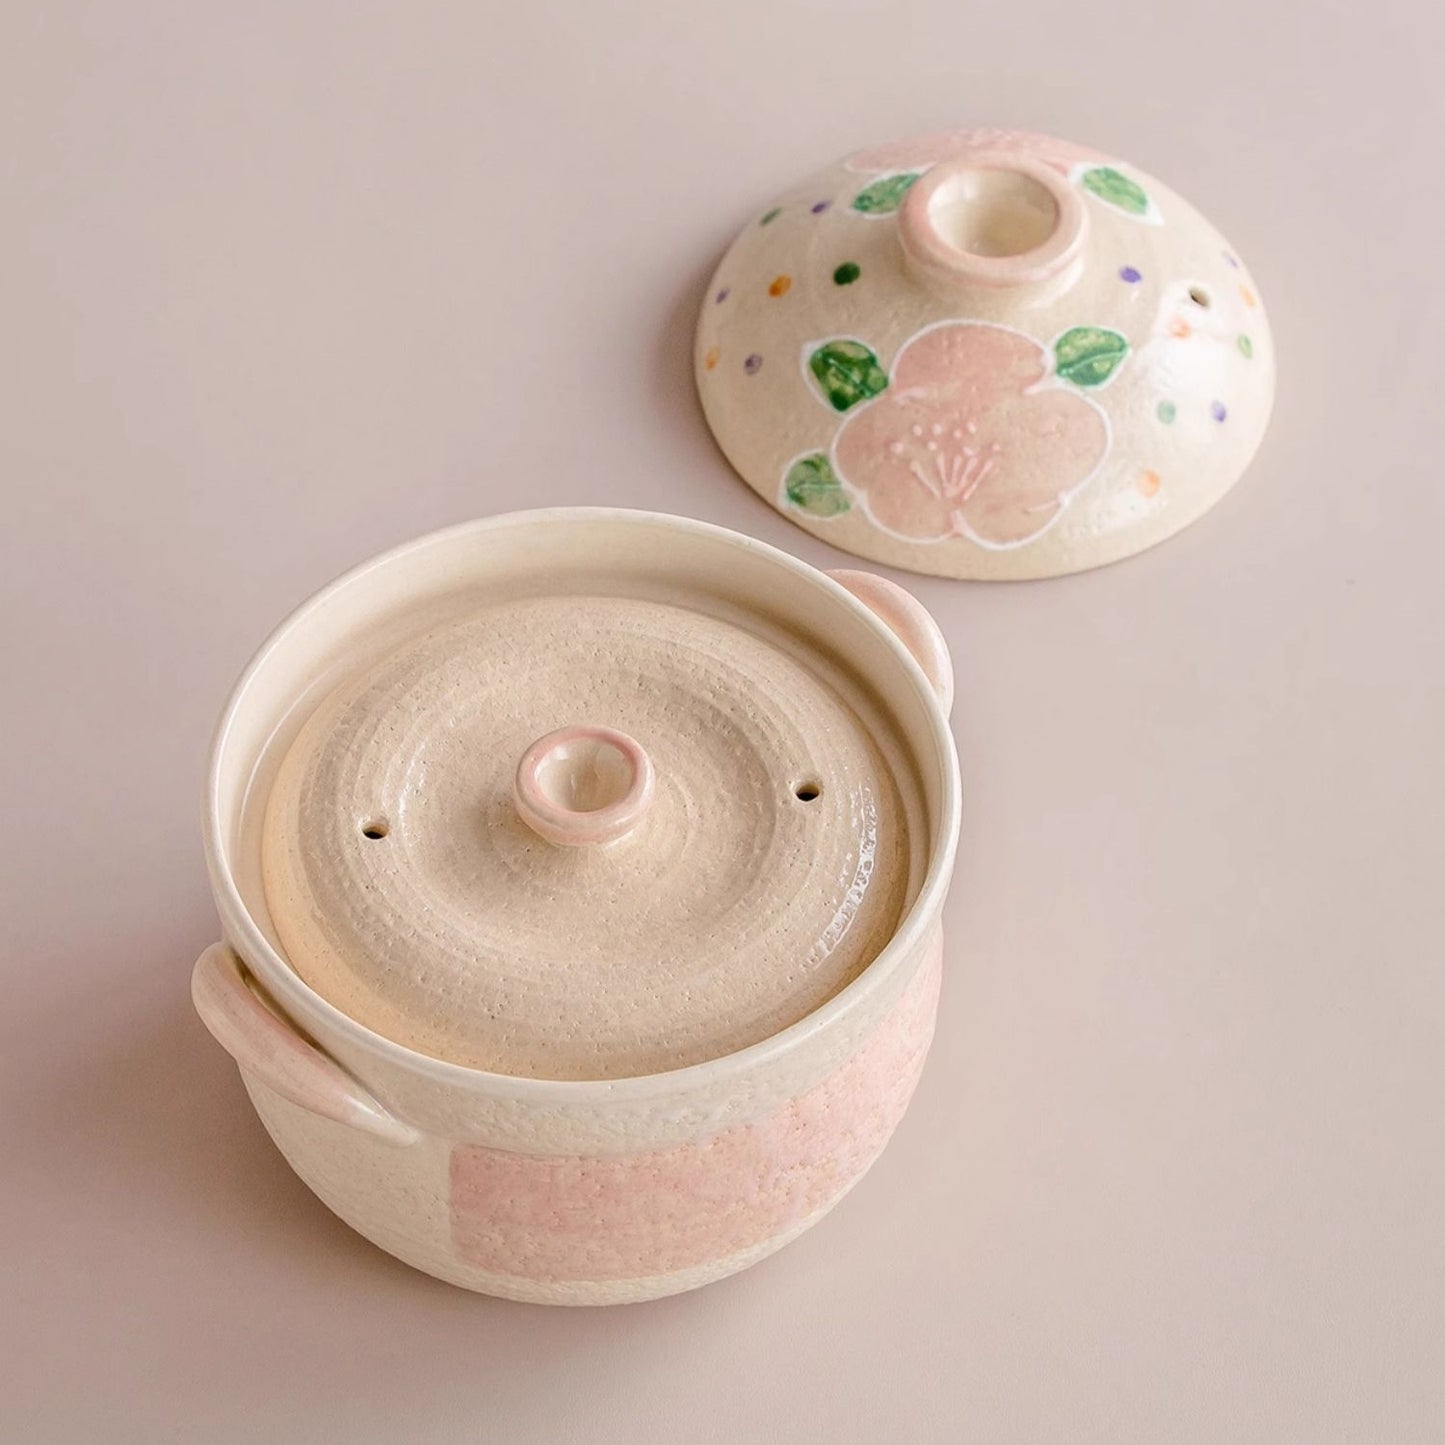 Toshiyuki Floral Banko Ware Earthen Pot: Double-Lid